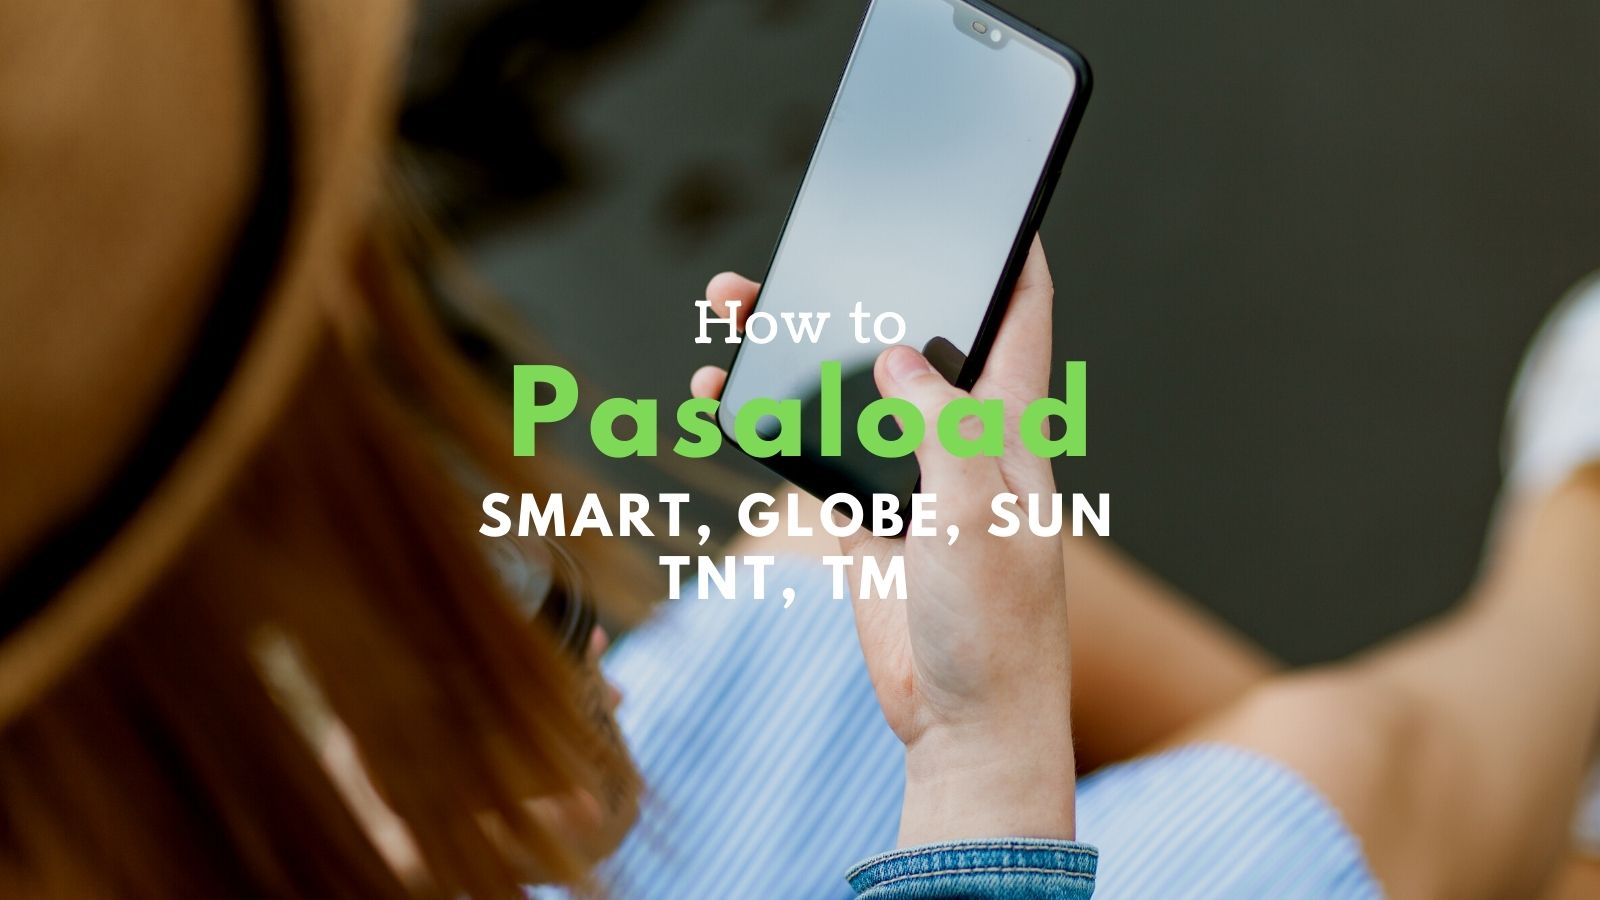 how to pasaload smart globe tm sun tnt